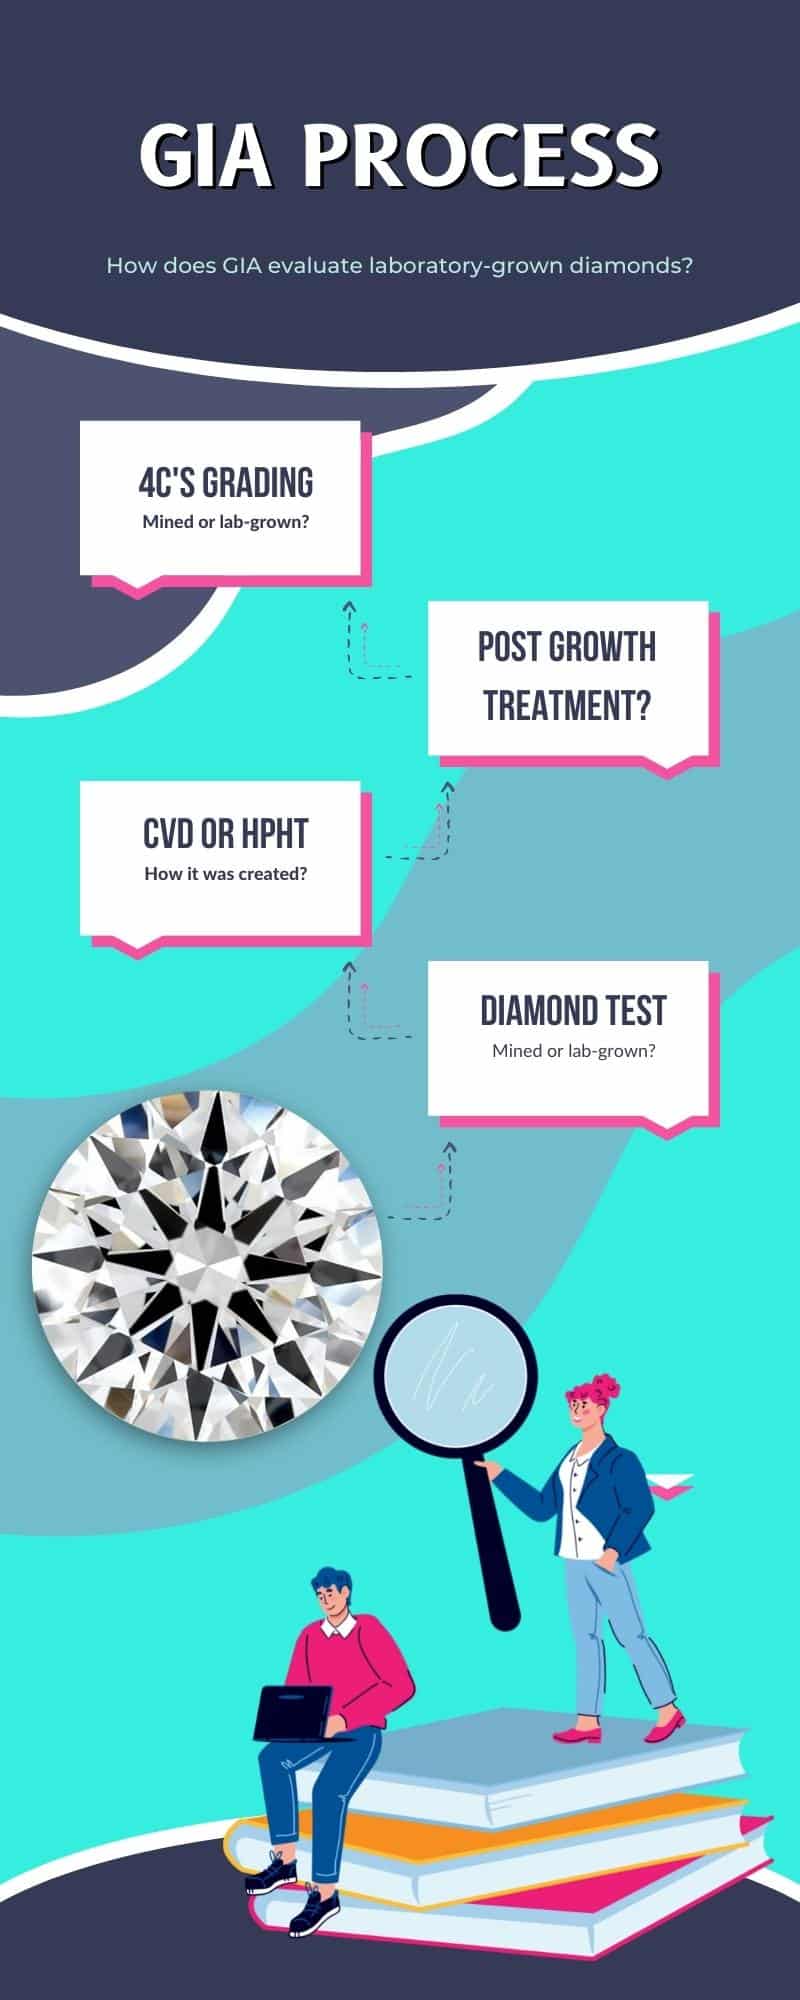 GIA lab grown diamonds grading process